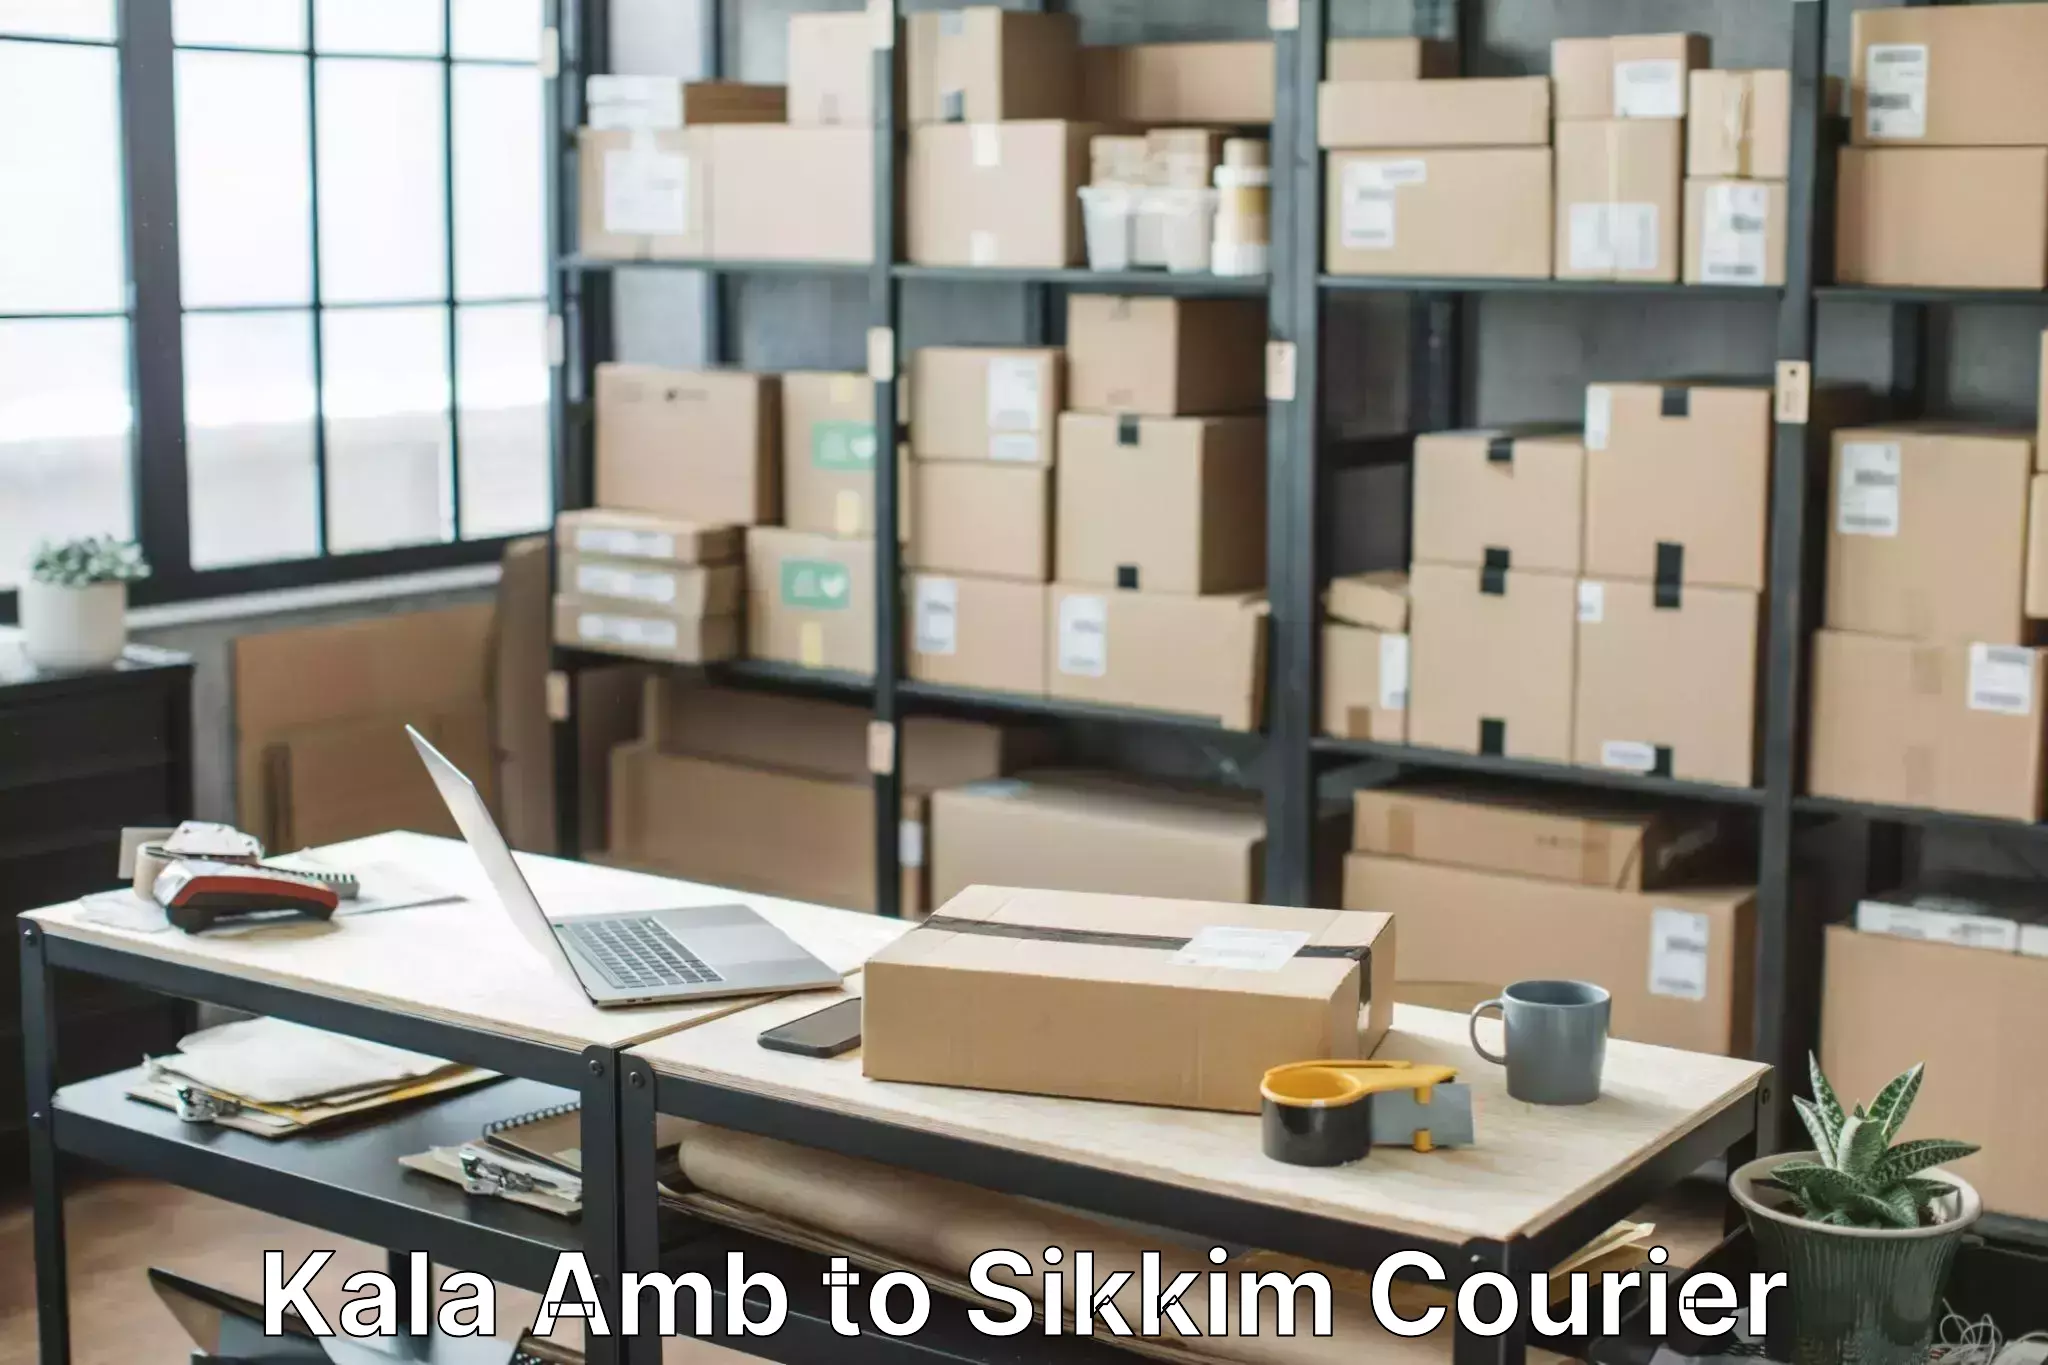 Professional moving company Kala Amb to Sikkim